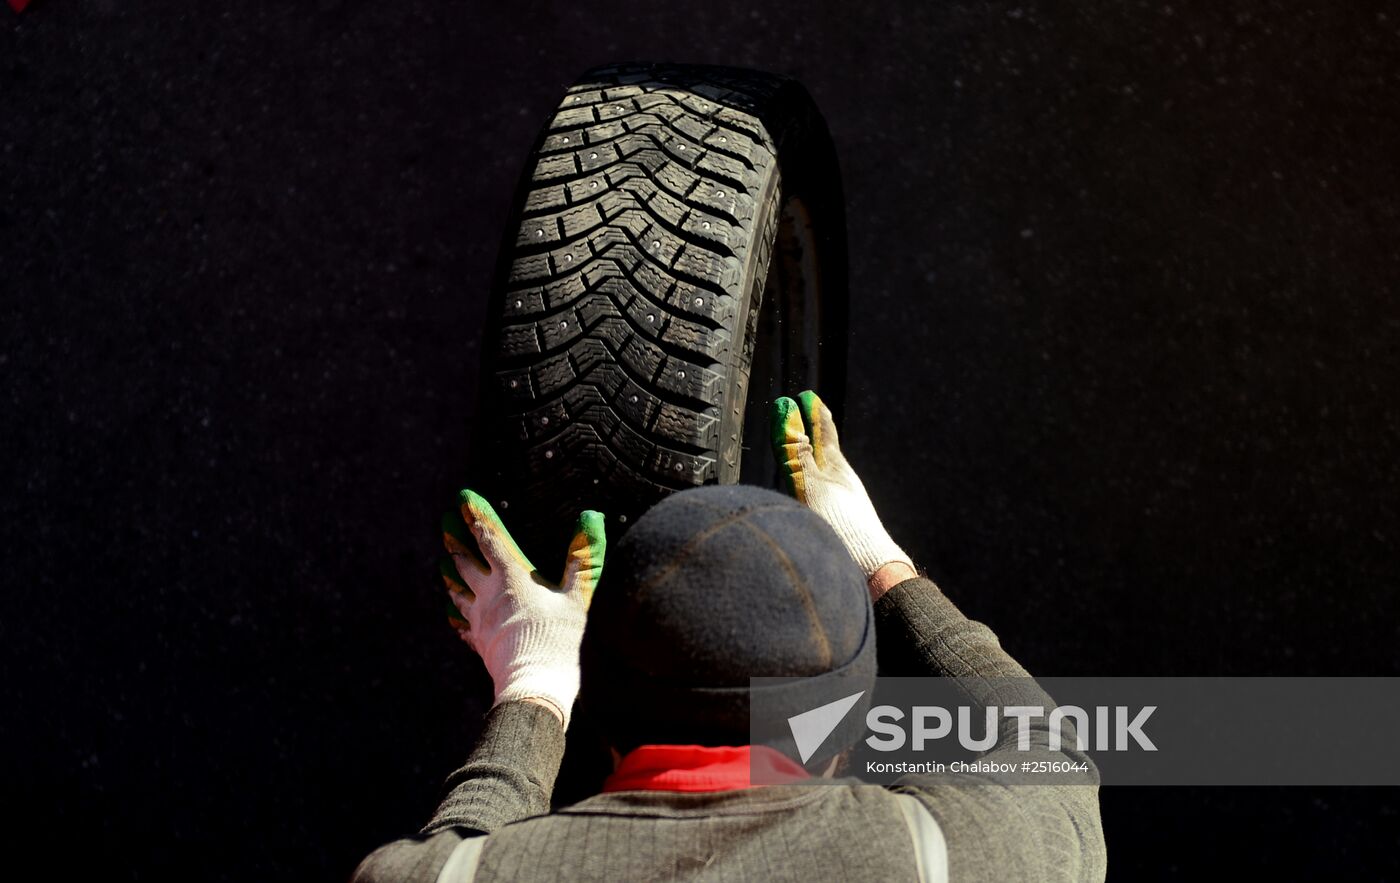 Tire shop at work in Veliky Novgorod